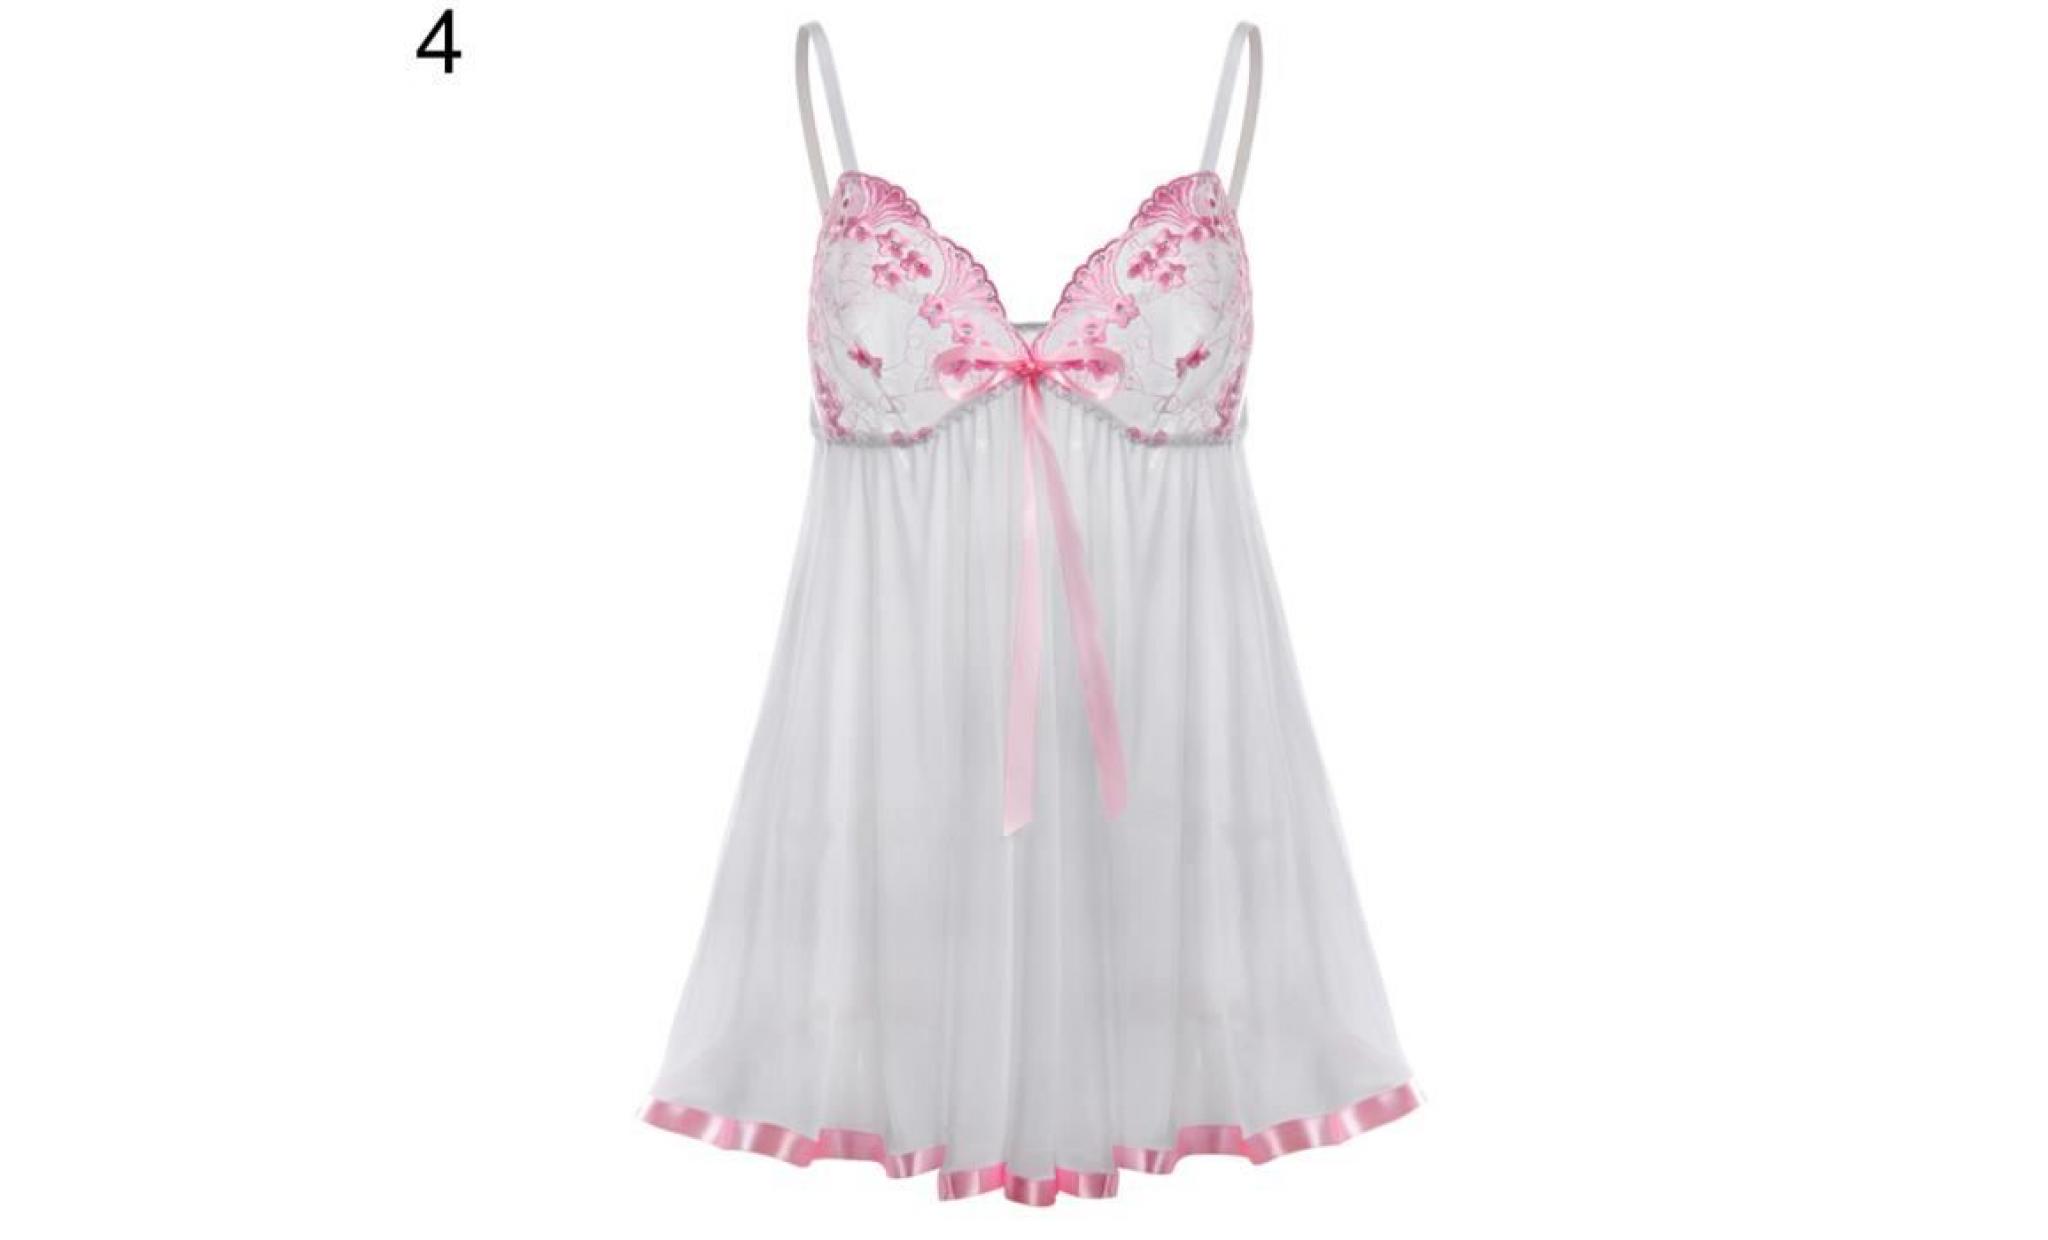 robe en dentelle transparente brodée à lacets pour femmes throng sleepwear nightwear pink & white m